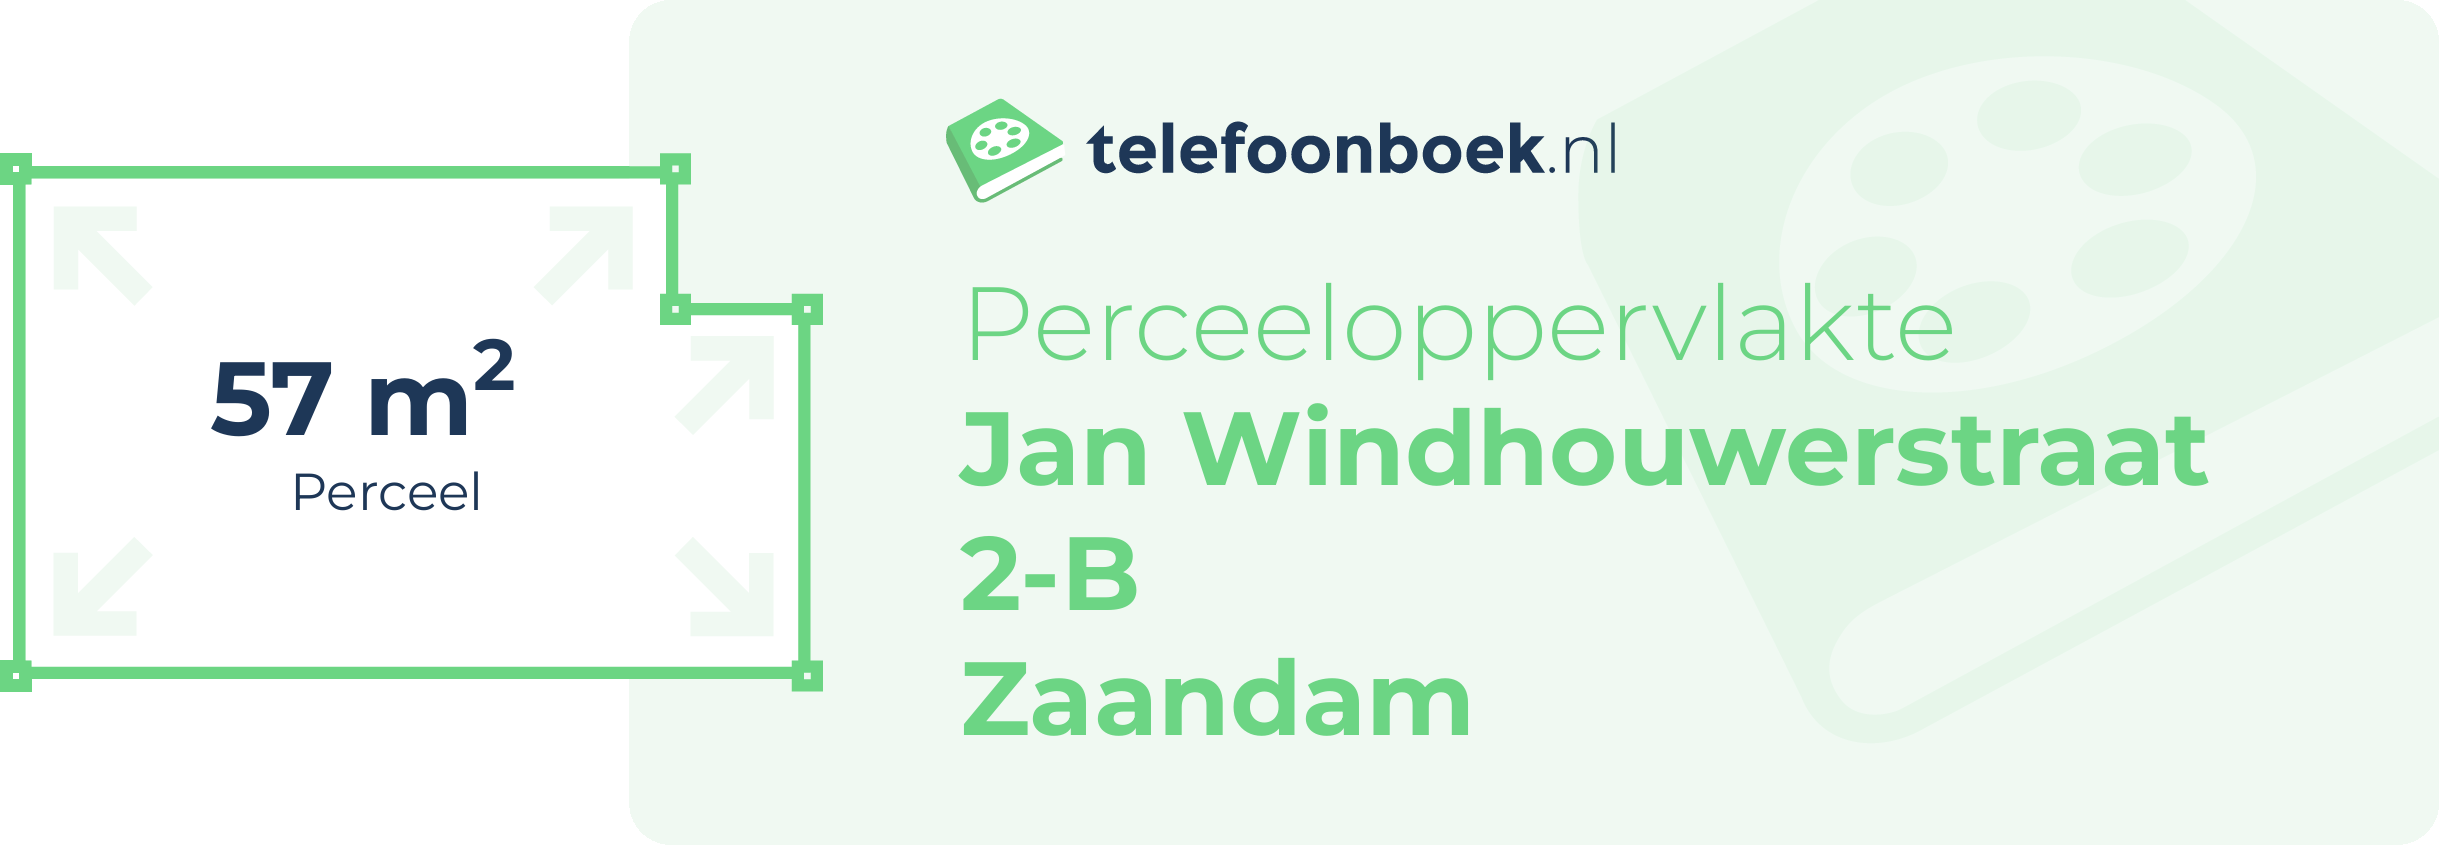 Perceeloppervlakte Jan Windhouwerstraat 2-B Zaandam